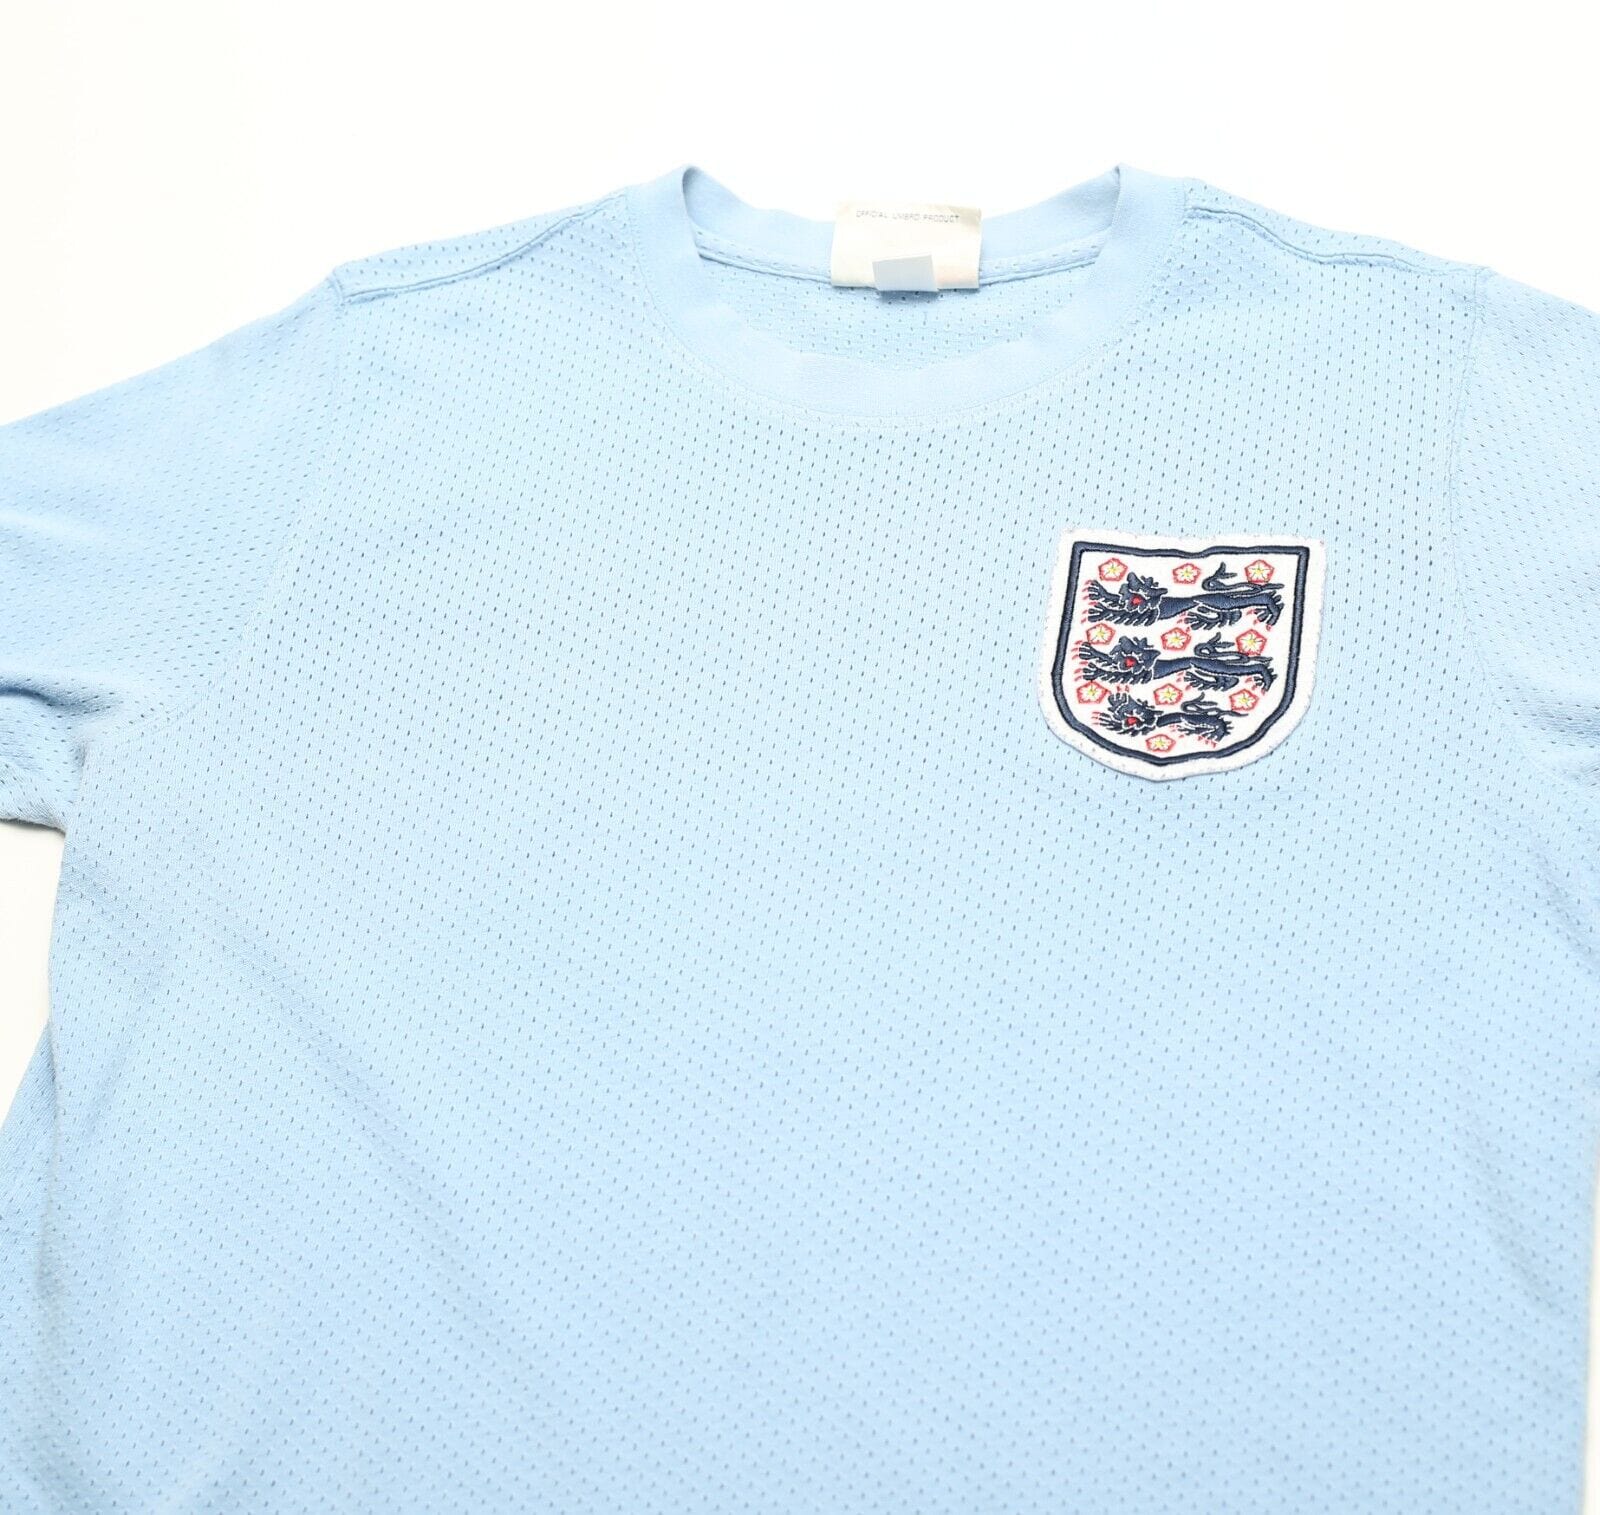 1970 MOORE #6 England Retro Umbro Third Football Shirt (M) West Ham Utd